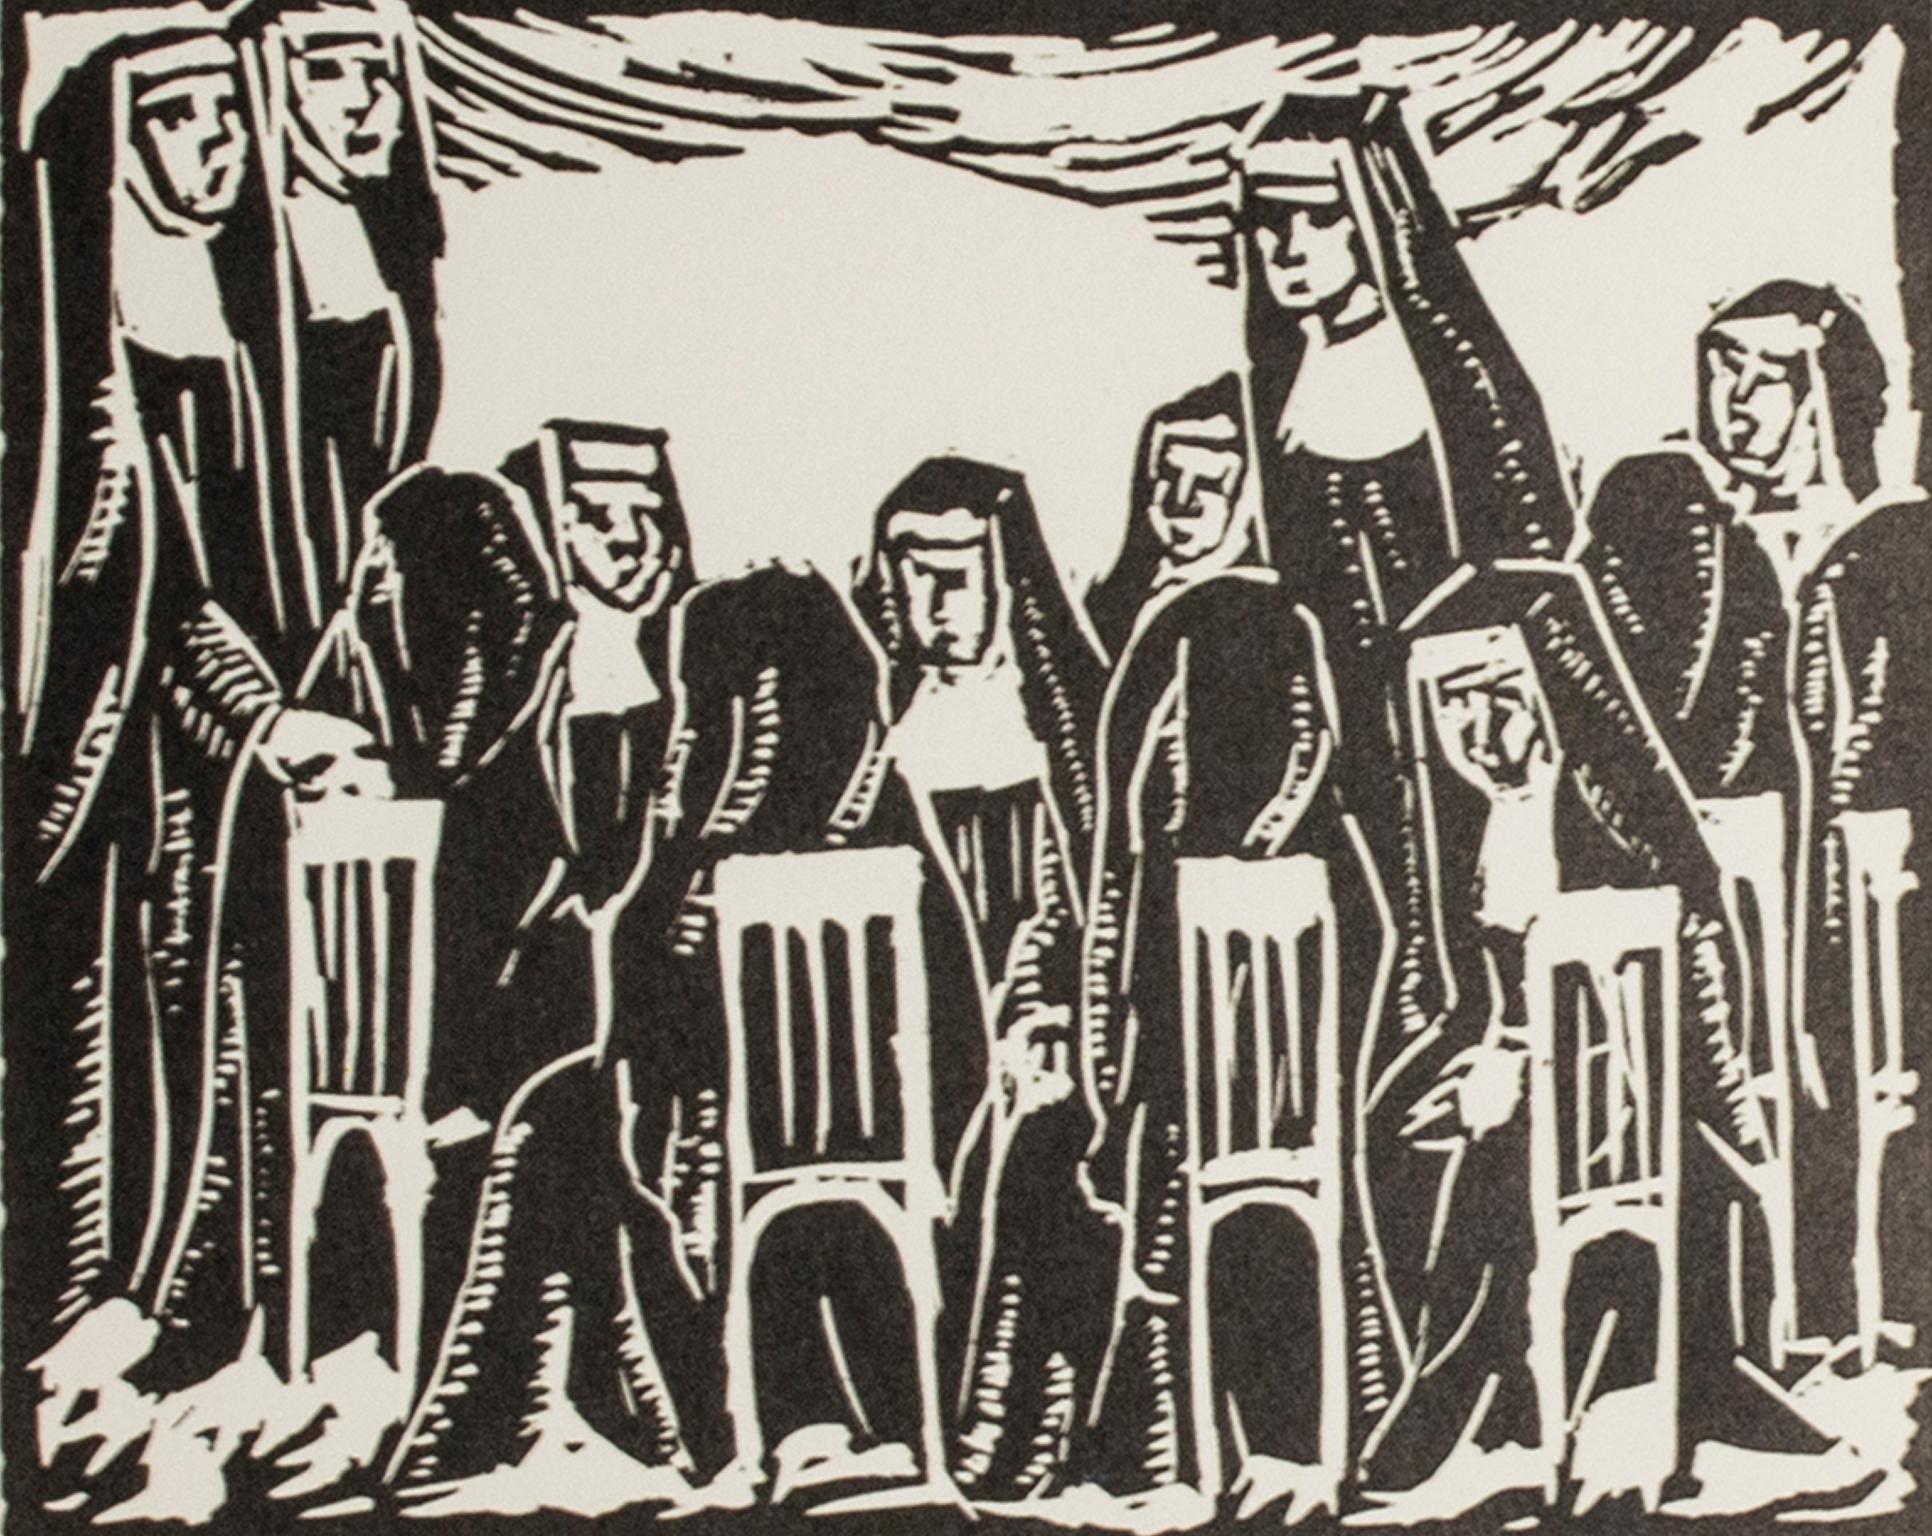 "Sisters, " Portrait of Nuns Linoleum Cut by Hulda Rotier Fischer